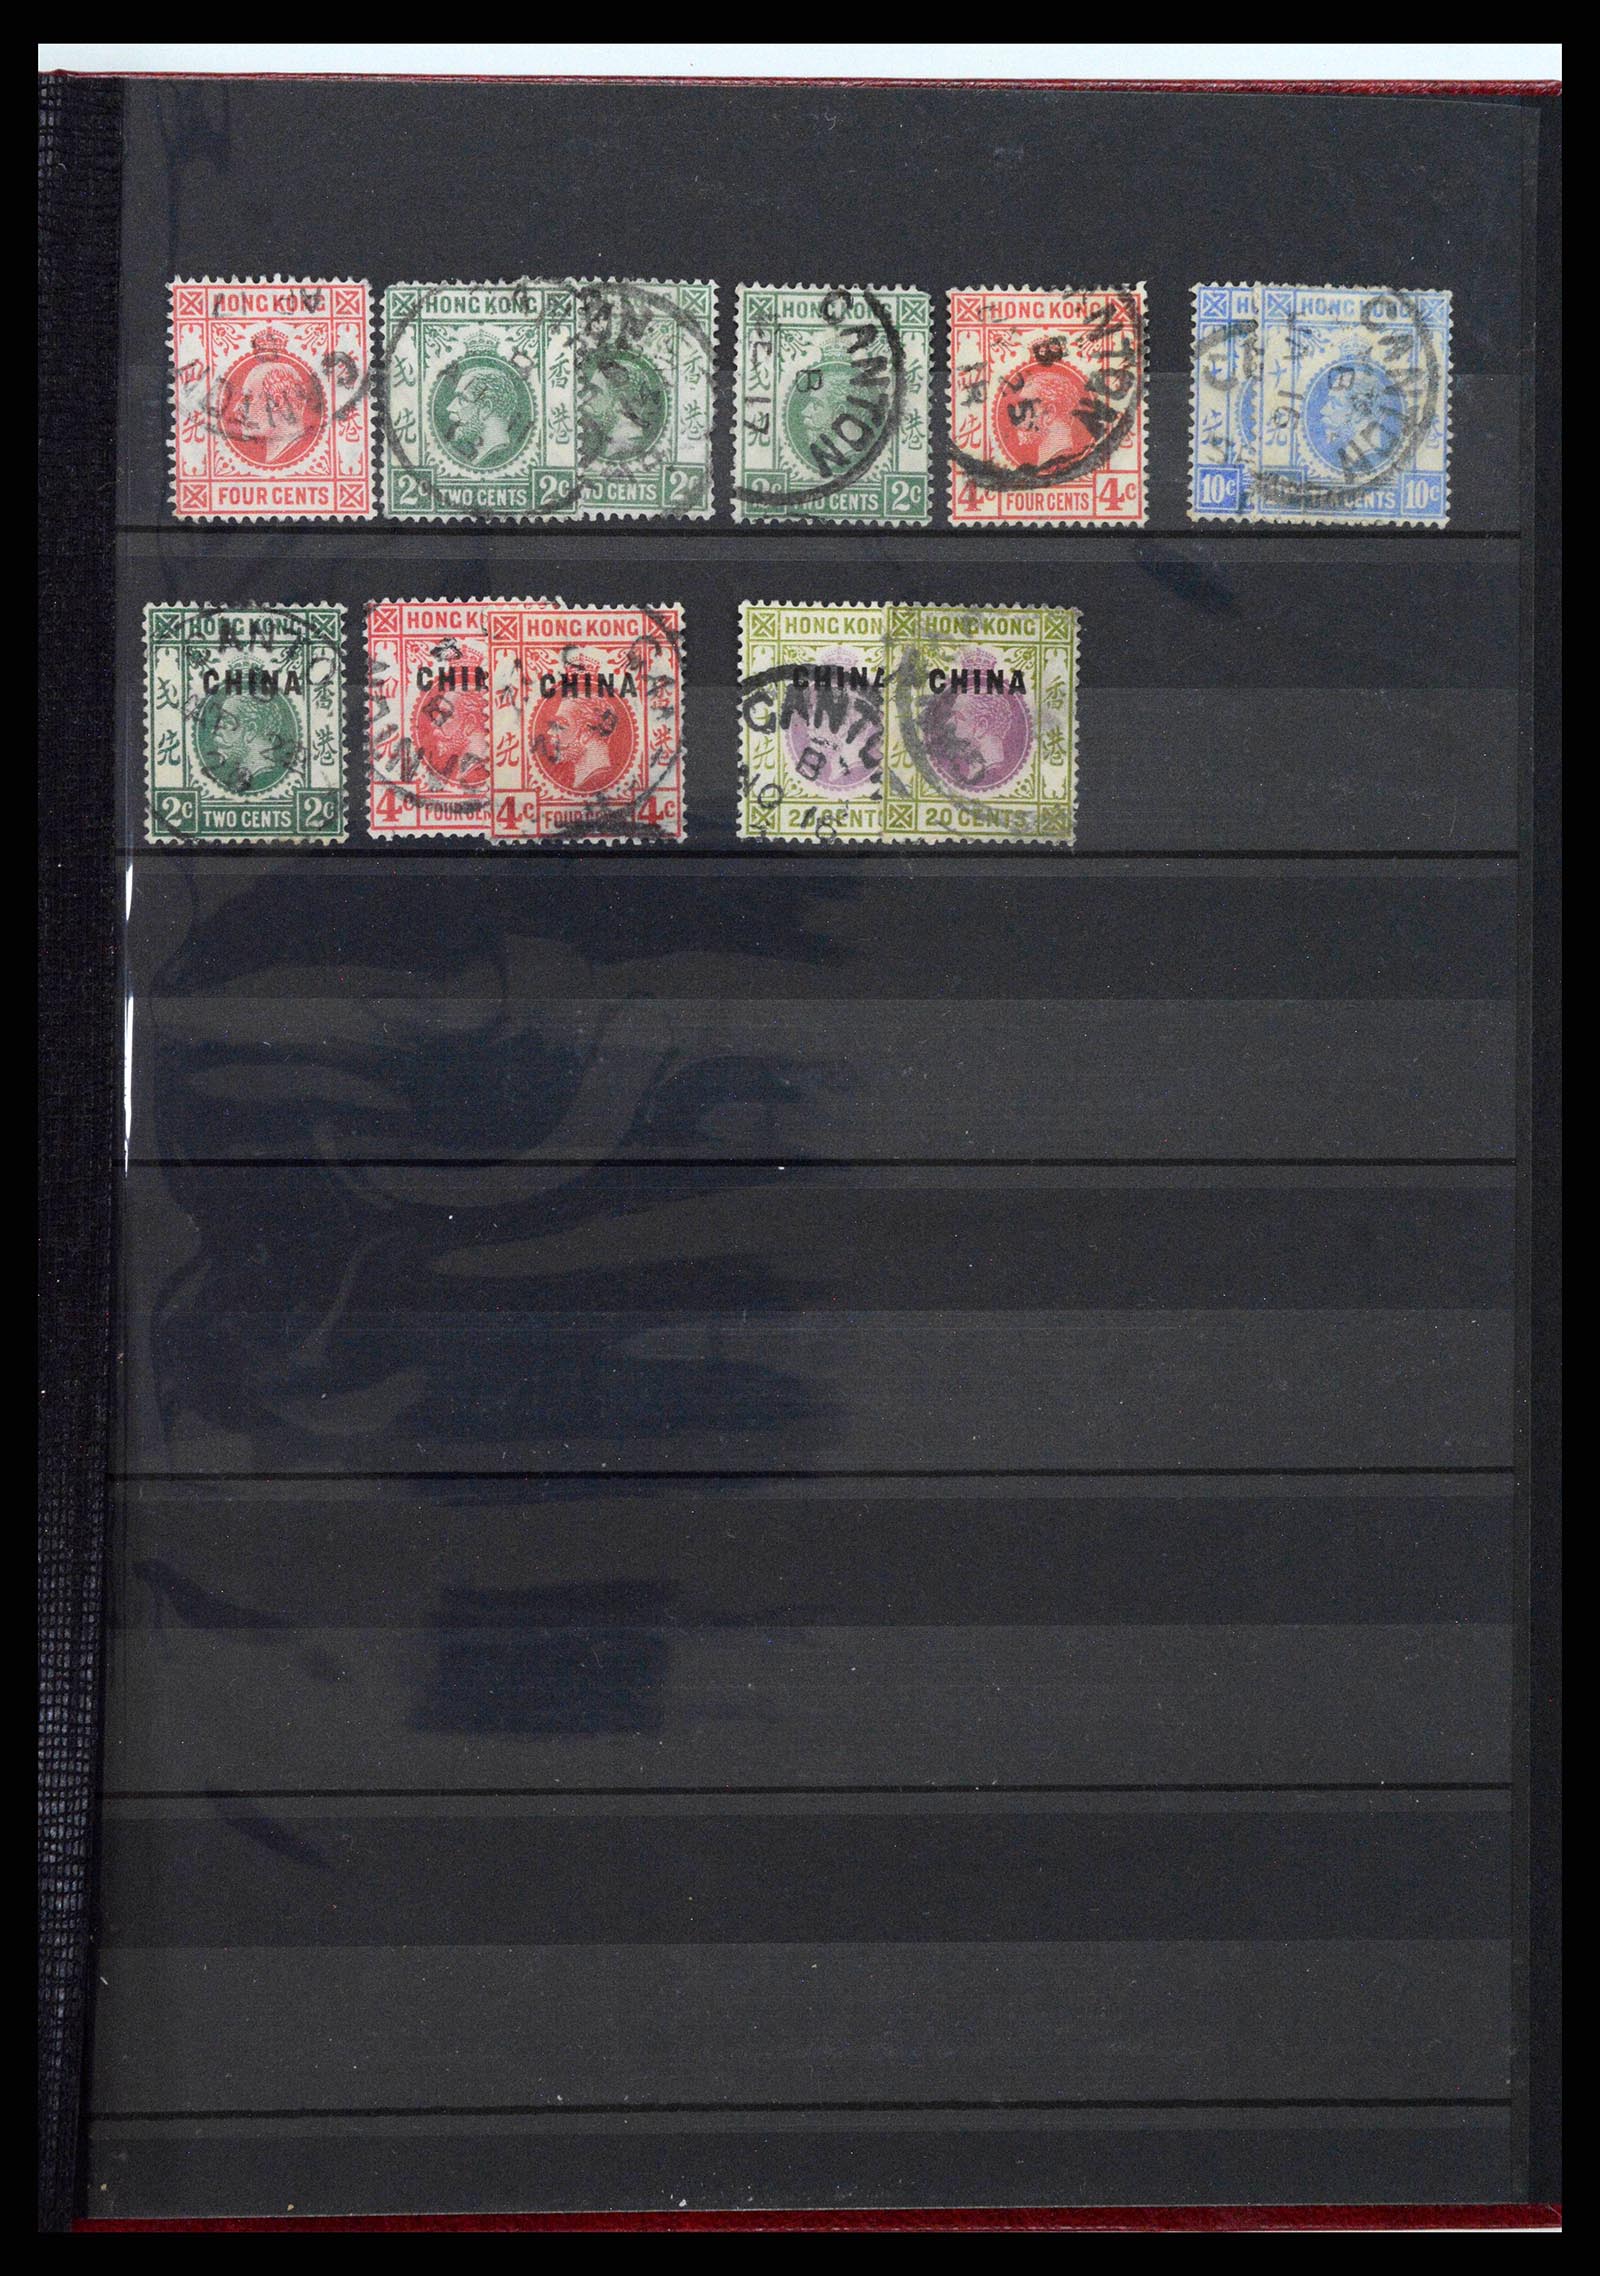 38844 0003 - Stamp collection 38844 Hong Kong treaty ports 1880-1922.